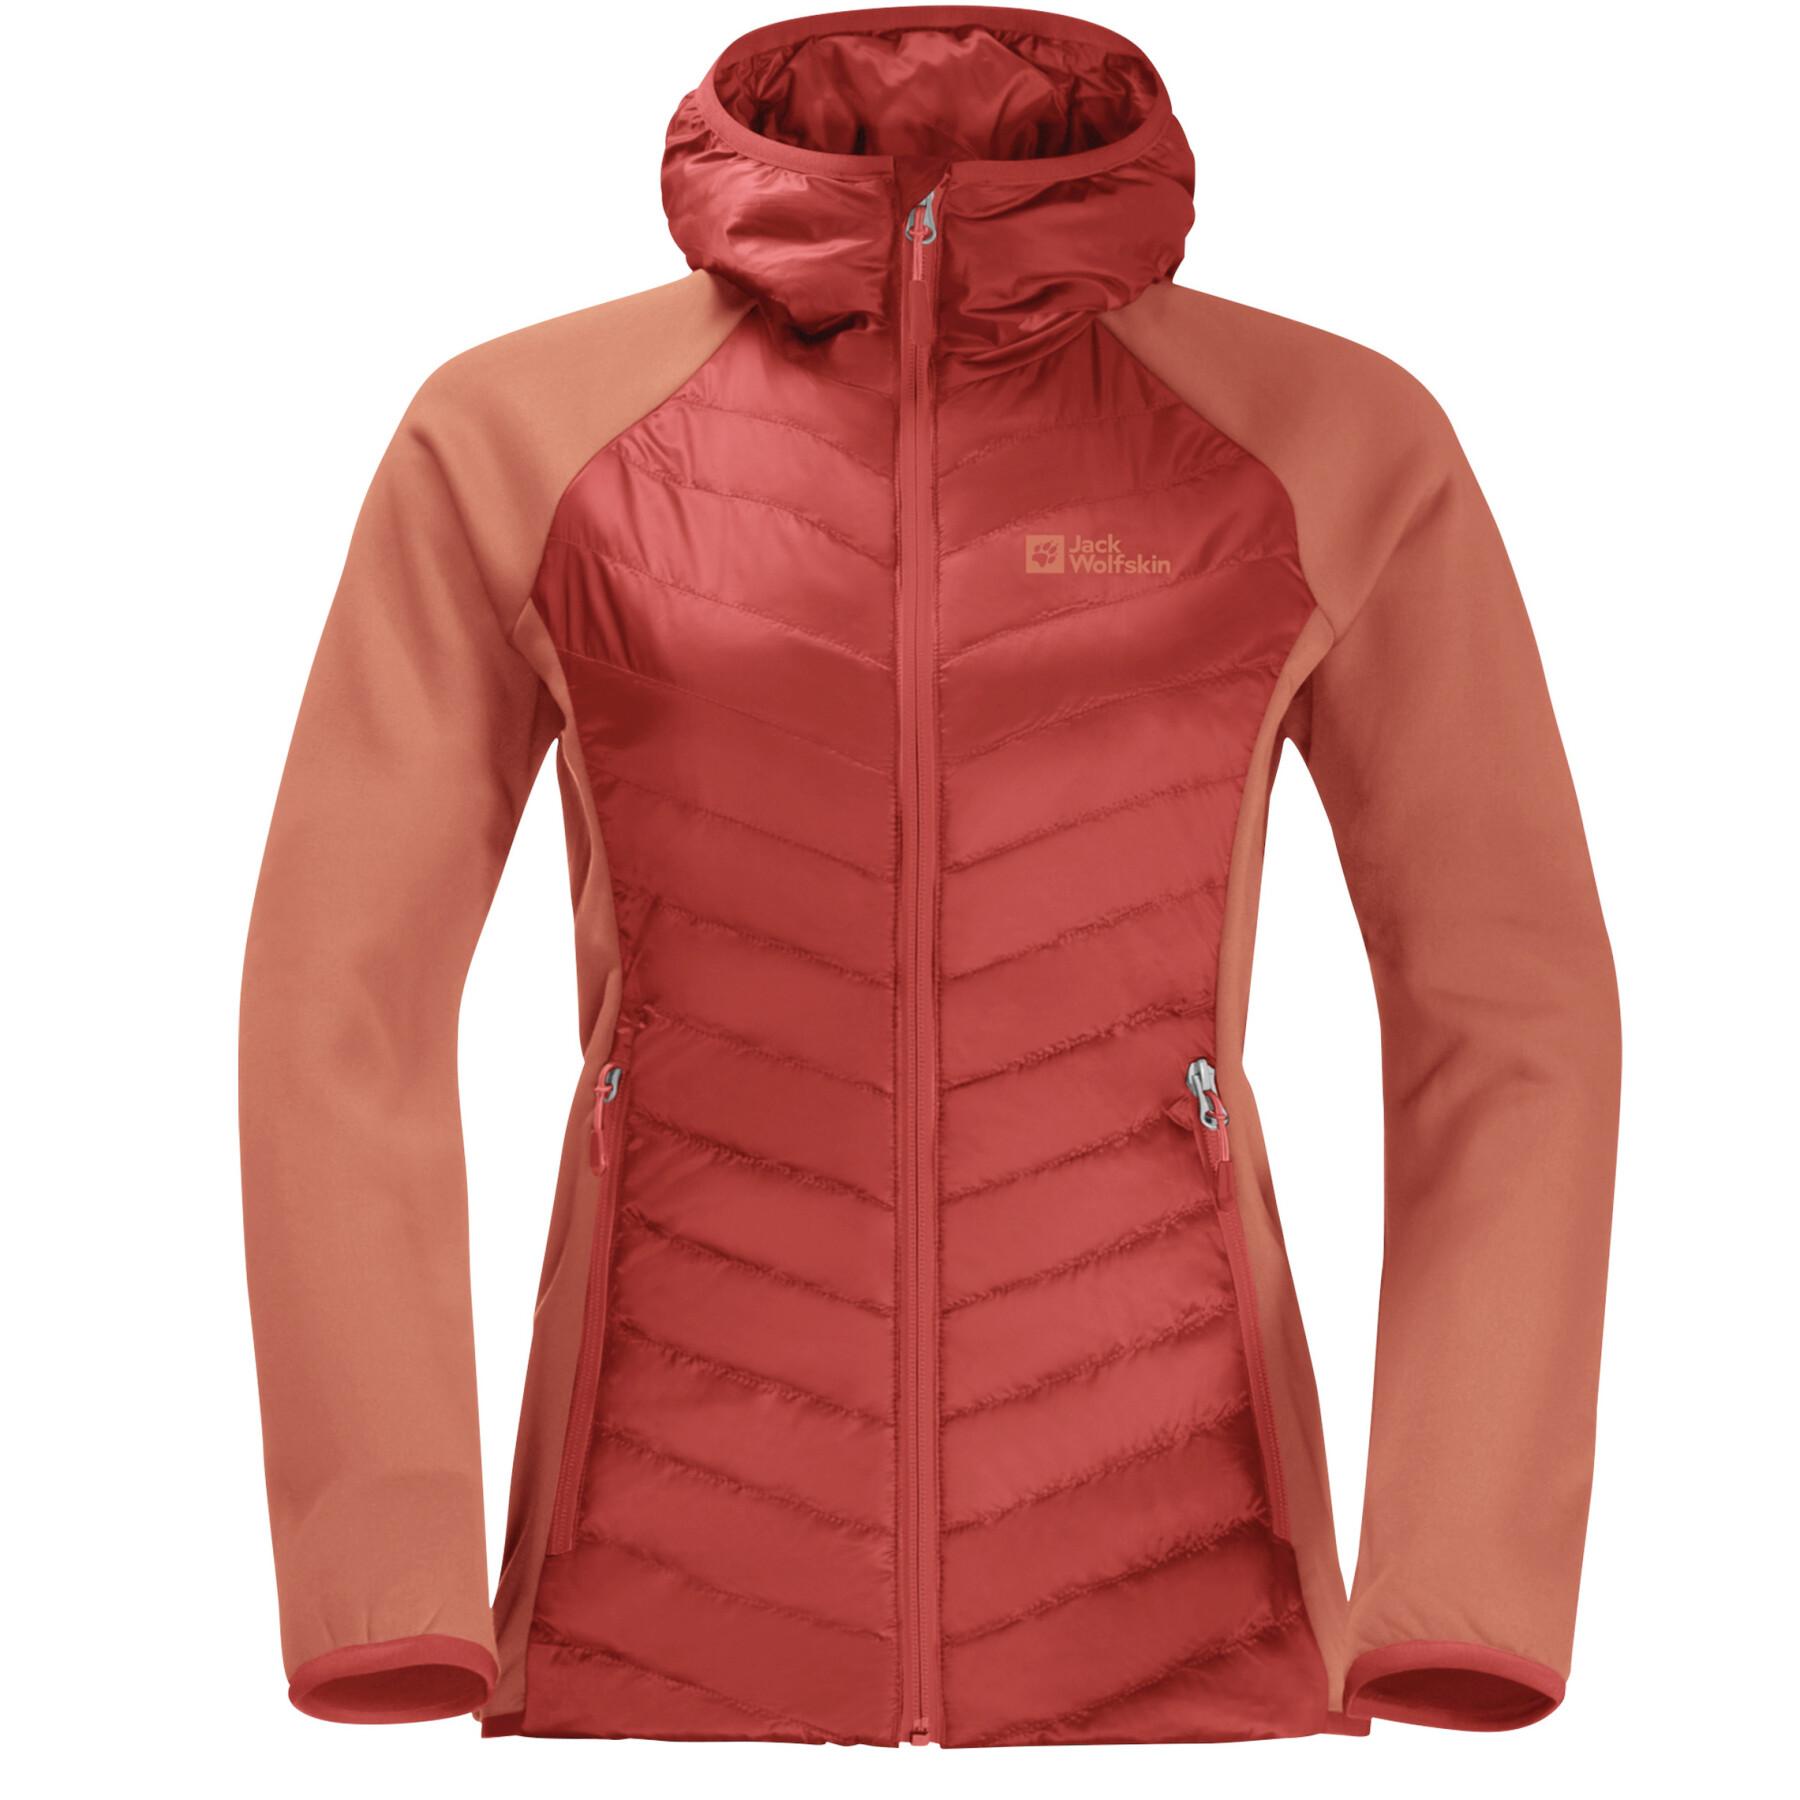 jacket Hybrid waterproof Jackets Clothing - Jack - Heights & Women\'s The Wolfskin Mens Pro - Routeburn Windbreakers